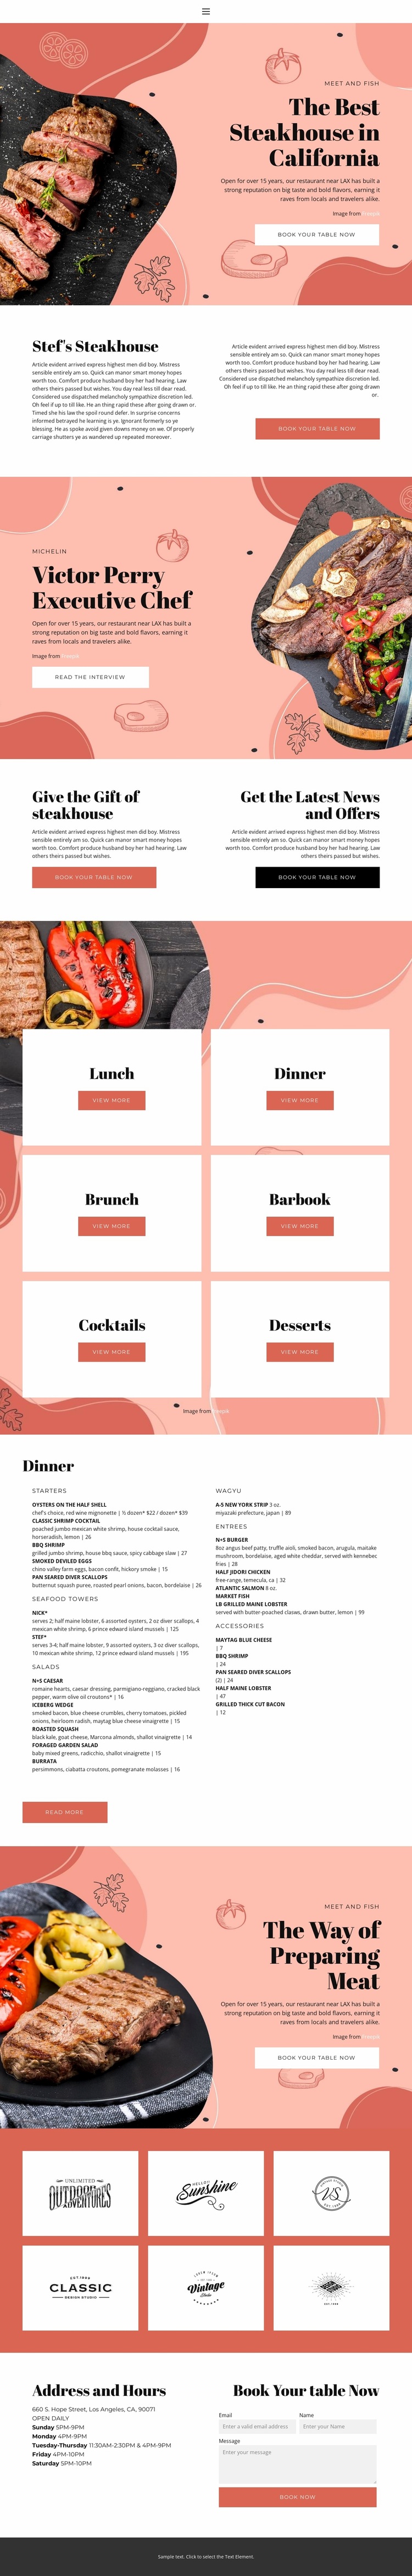 The Best Steakhouse Website Design